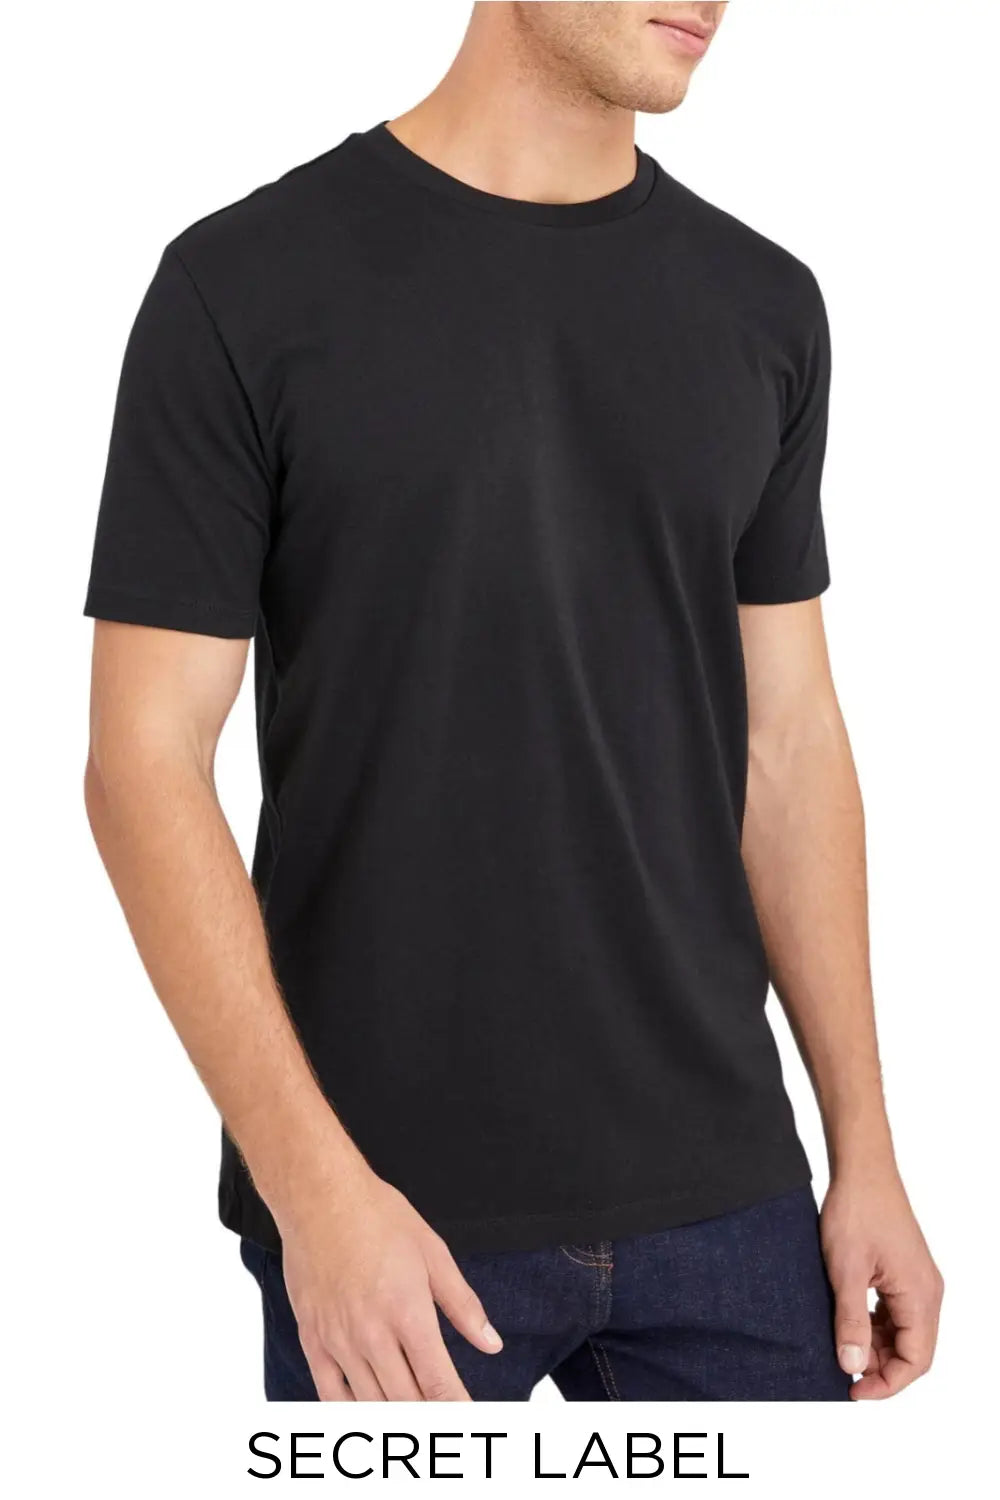 Secret Label Crew Neck Slim Fit T Shirt Black / XS / Regular